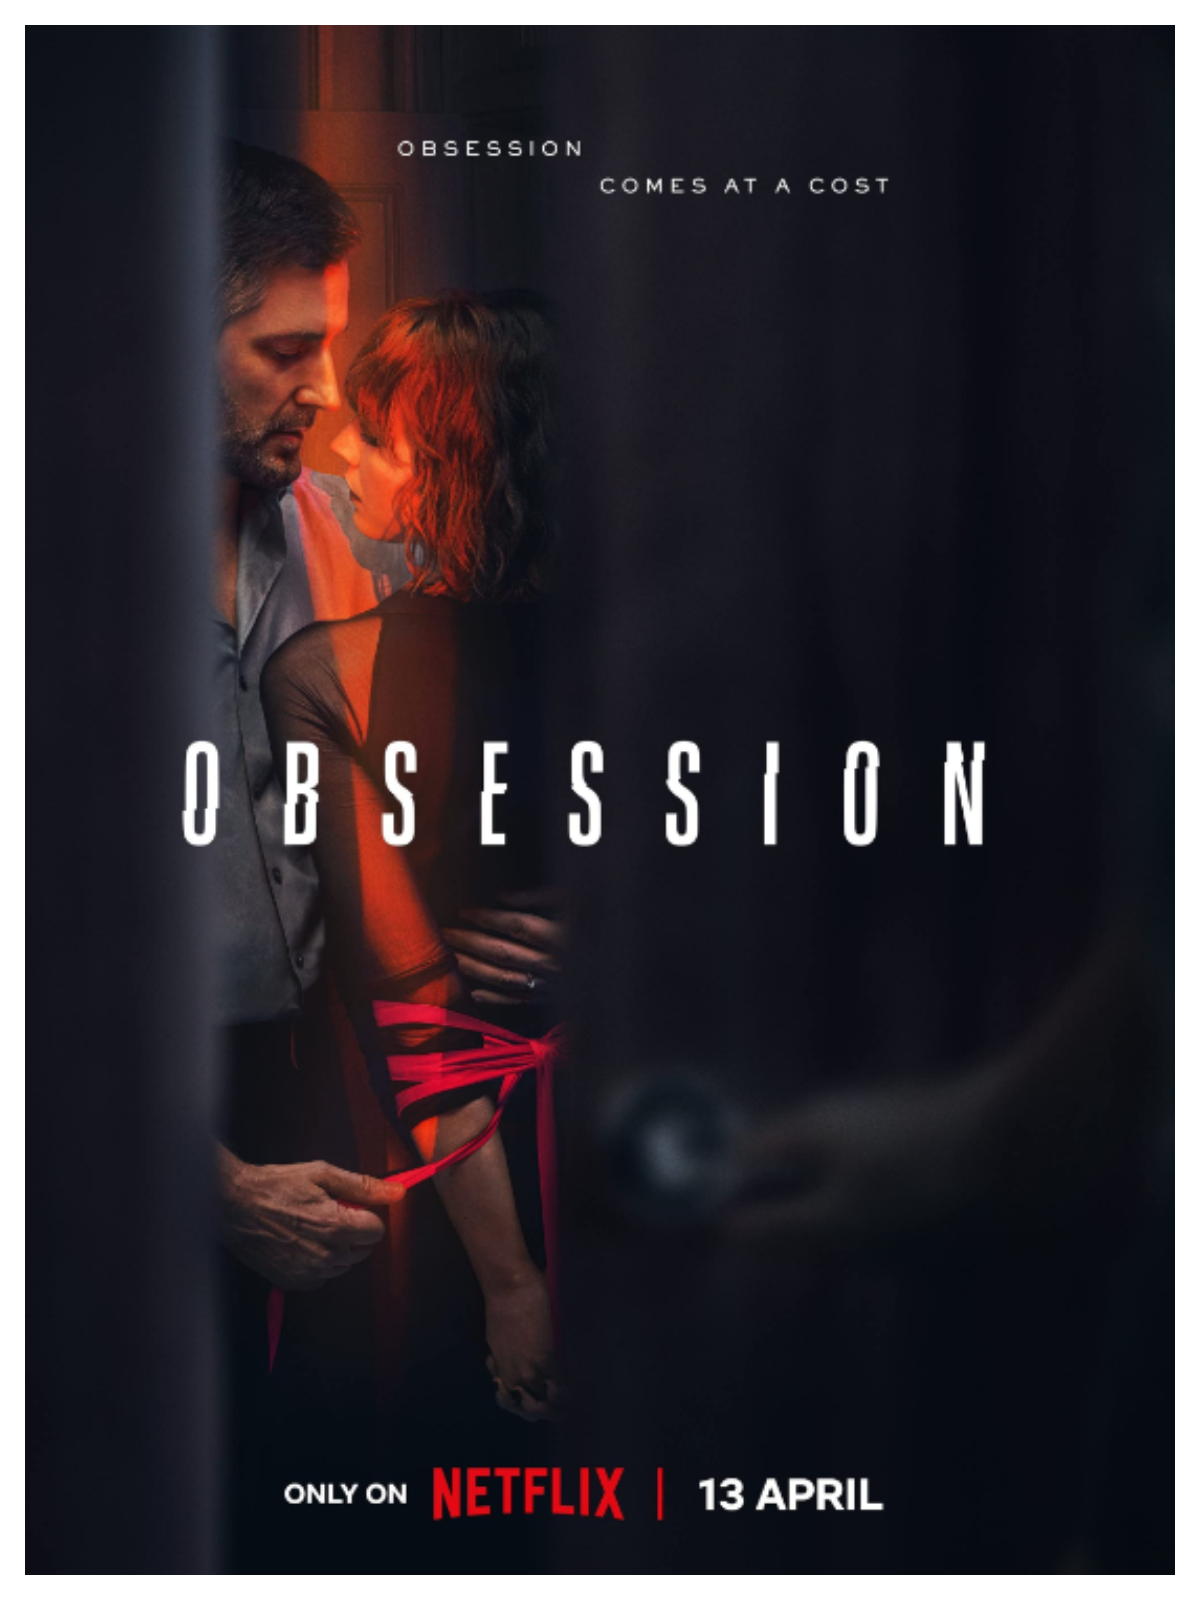 Obsession (Credits: IMDB)